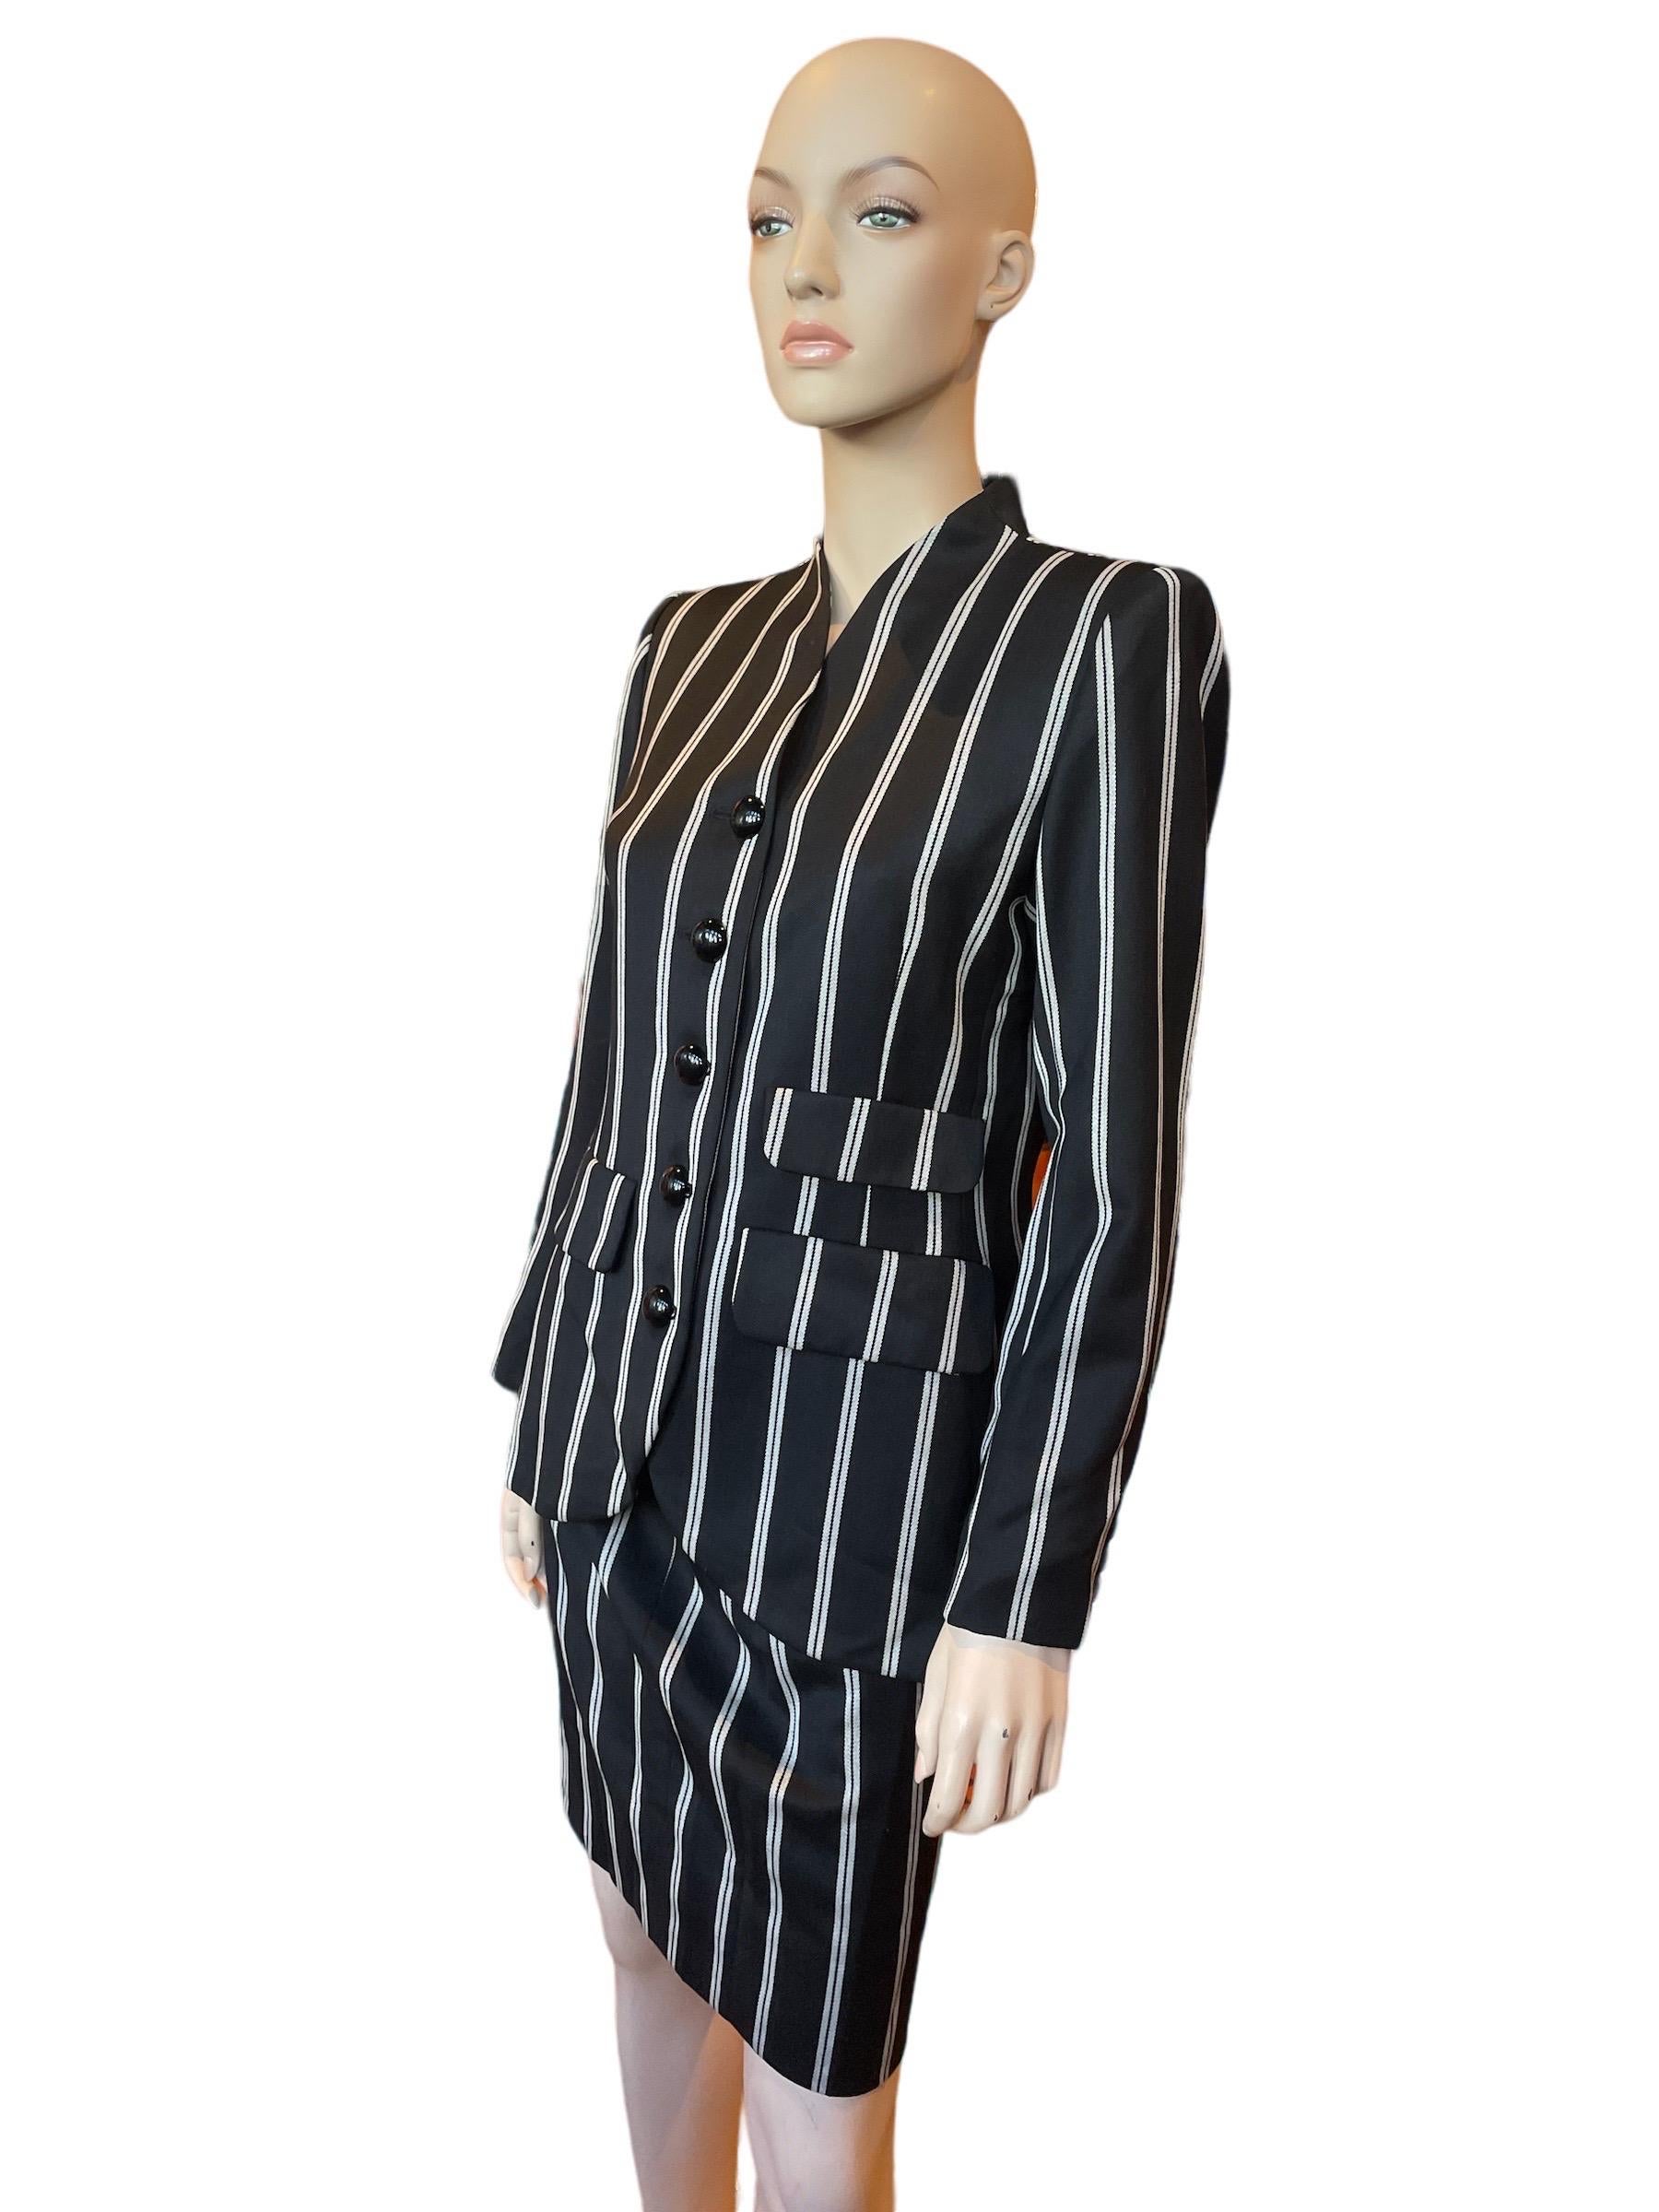 1980s Yves Saint Laurent Pin Striped Blazer and Skirt 

Skirt Measurements: 
Waist: 26